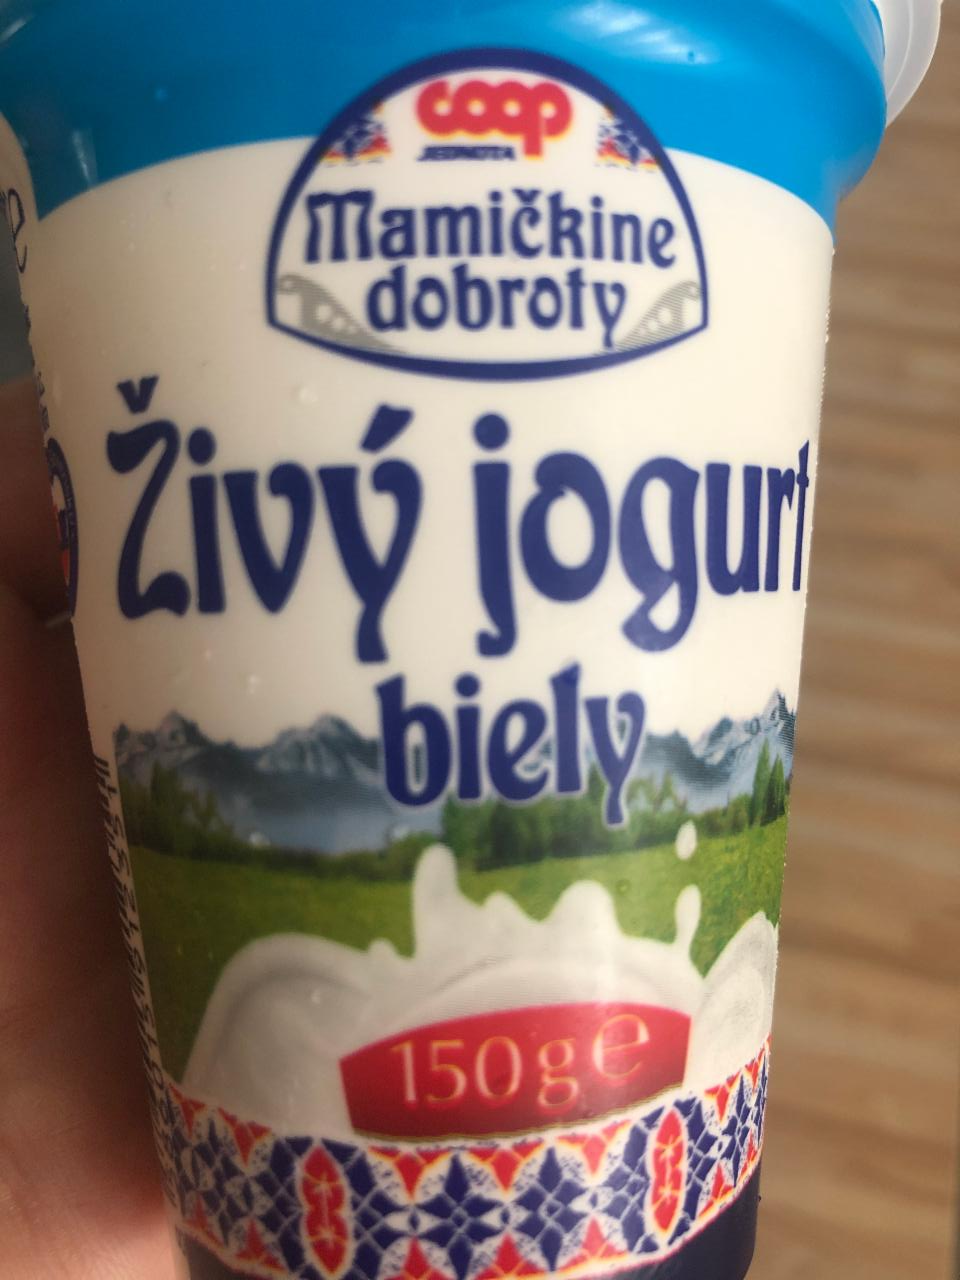 Fotografie - Mamičkine dobroty Živý jogurt biely Coop